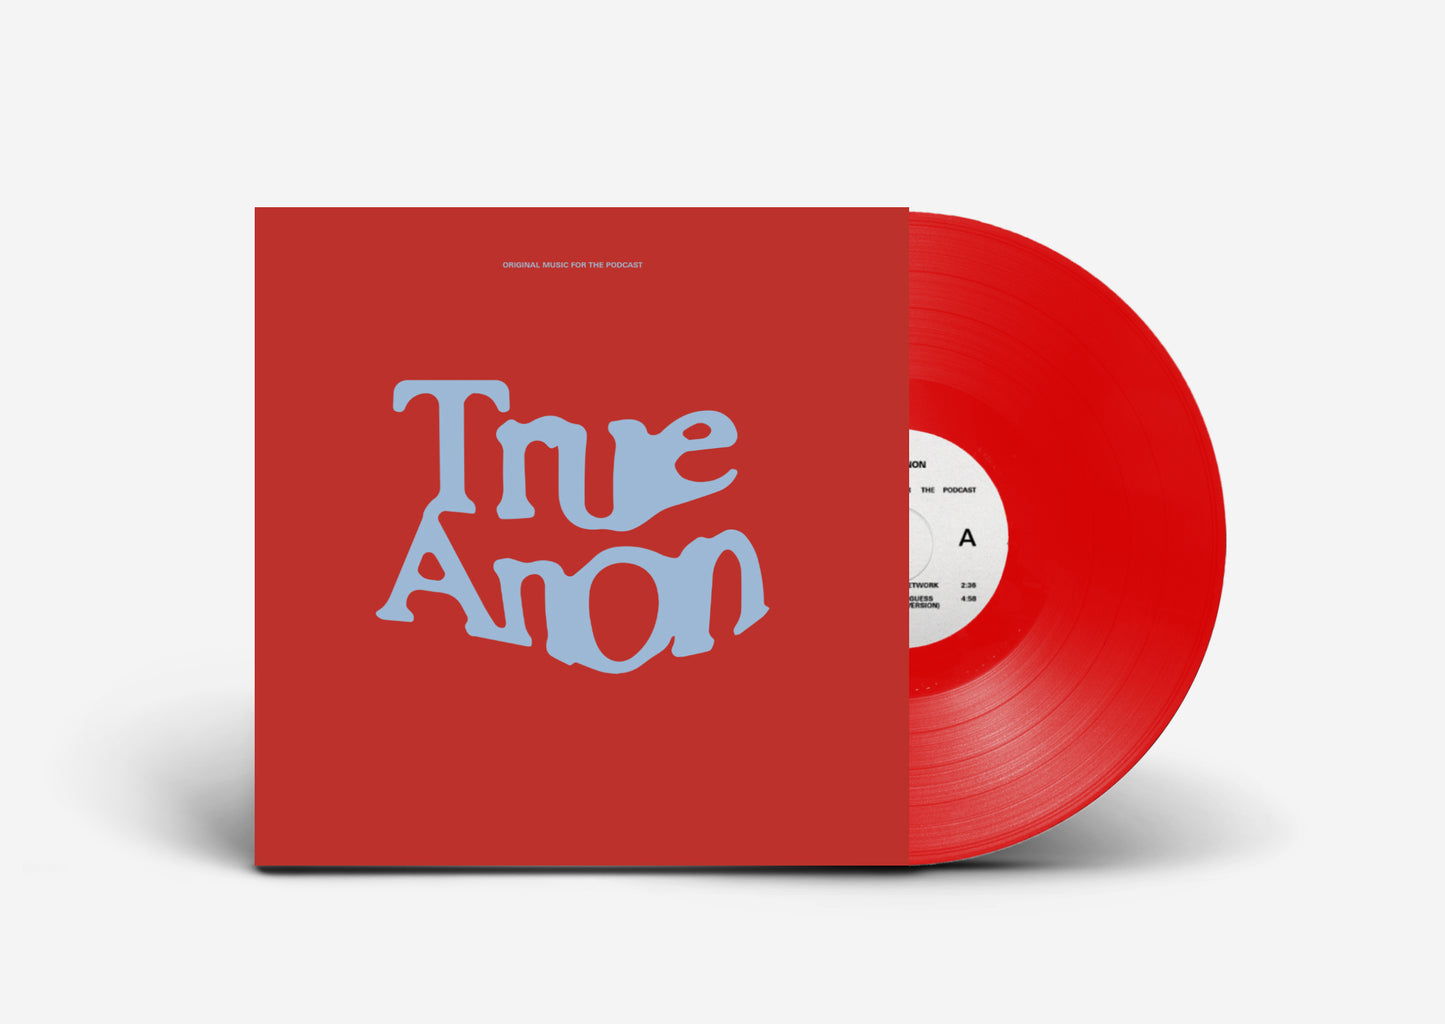 TrueAnon 12" 45 — Red Vinyl